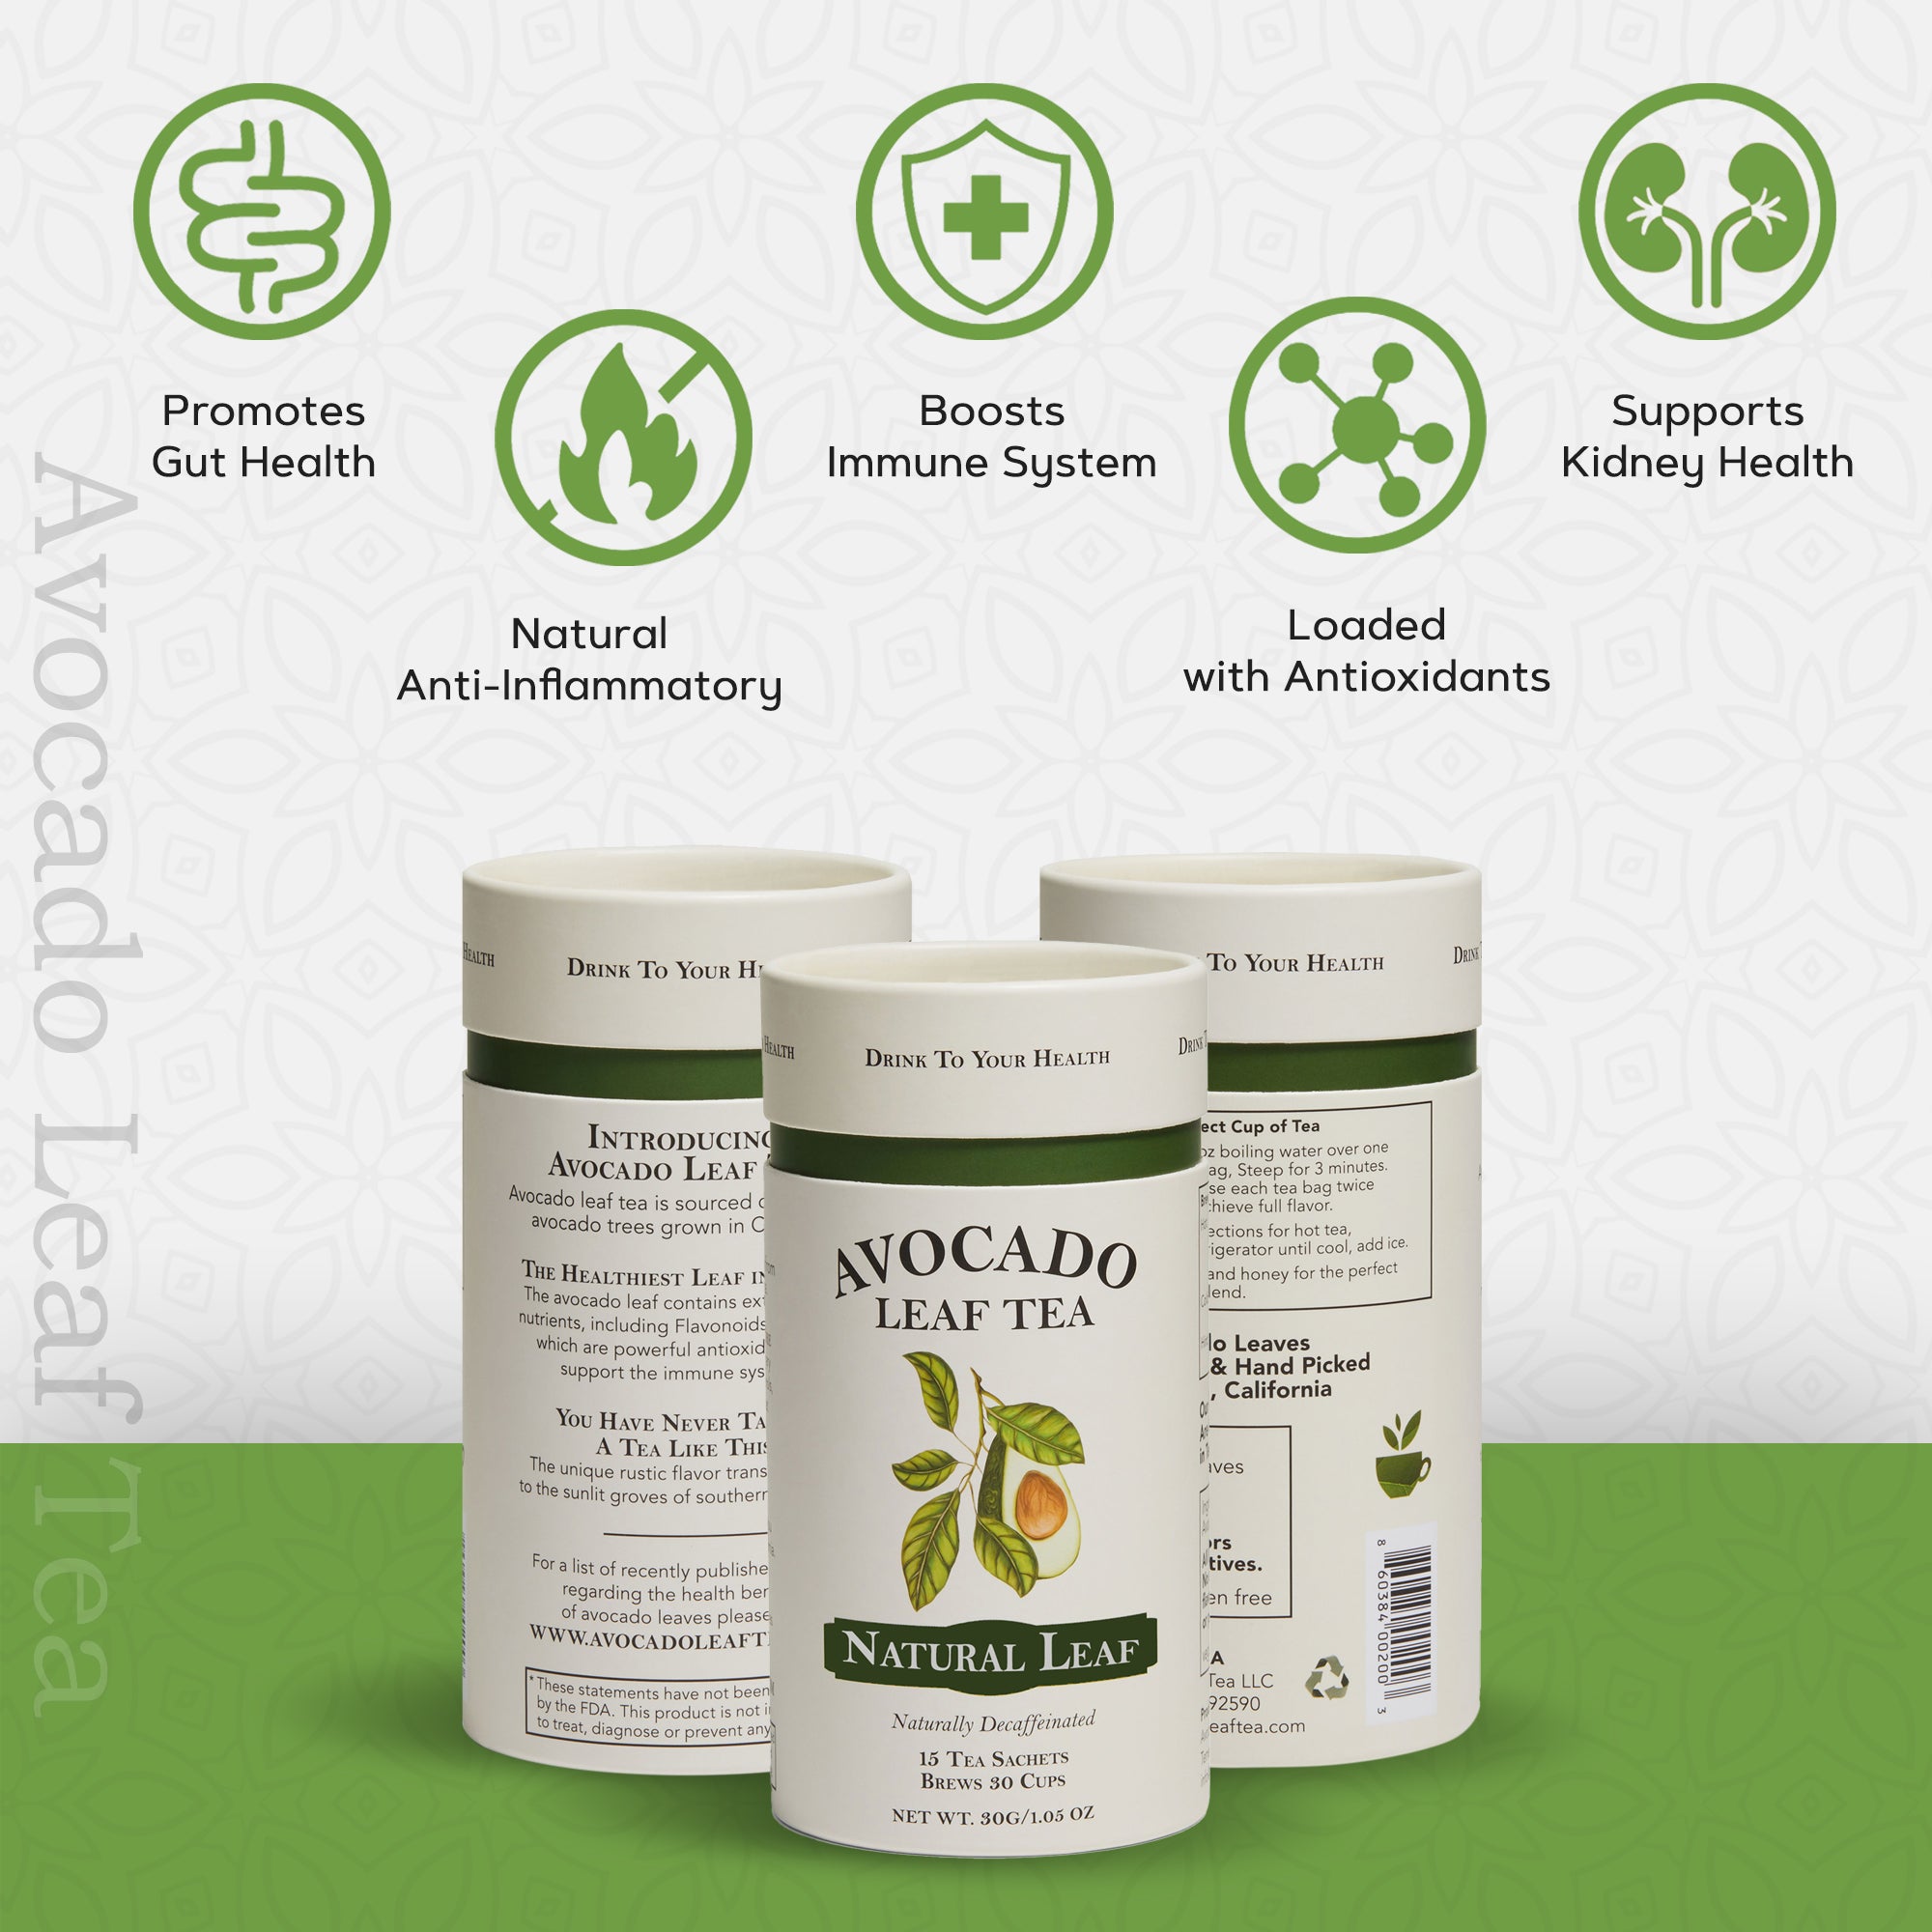 Avocado Leaf Tea Natural Leaf - Avocado Tea Co. wellness tea at its best, longevity, boosts immunity, inflammation